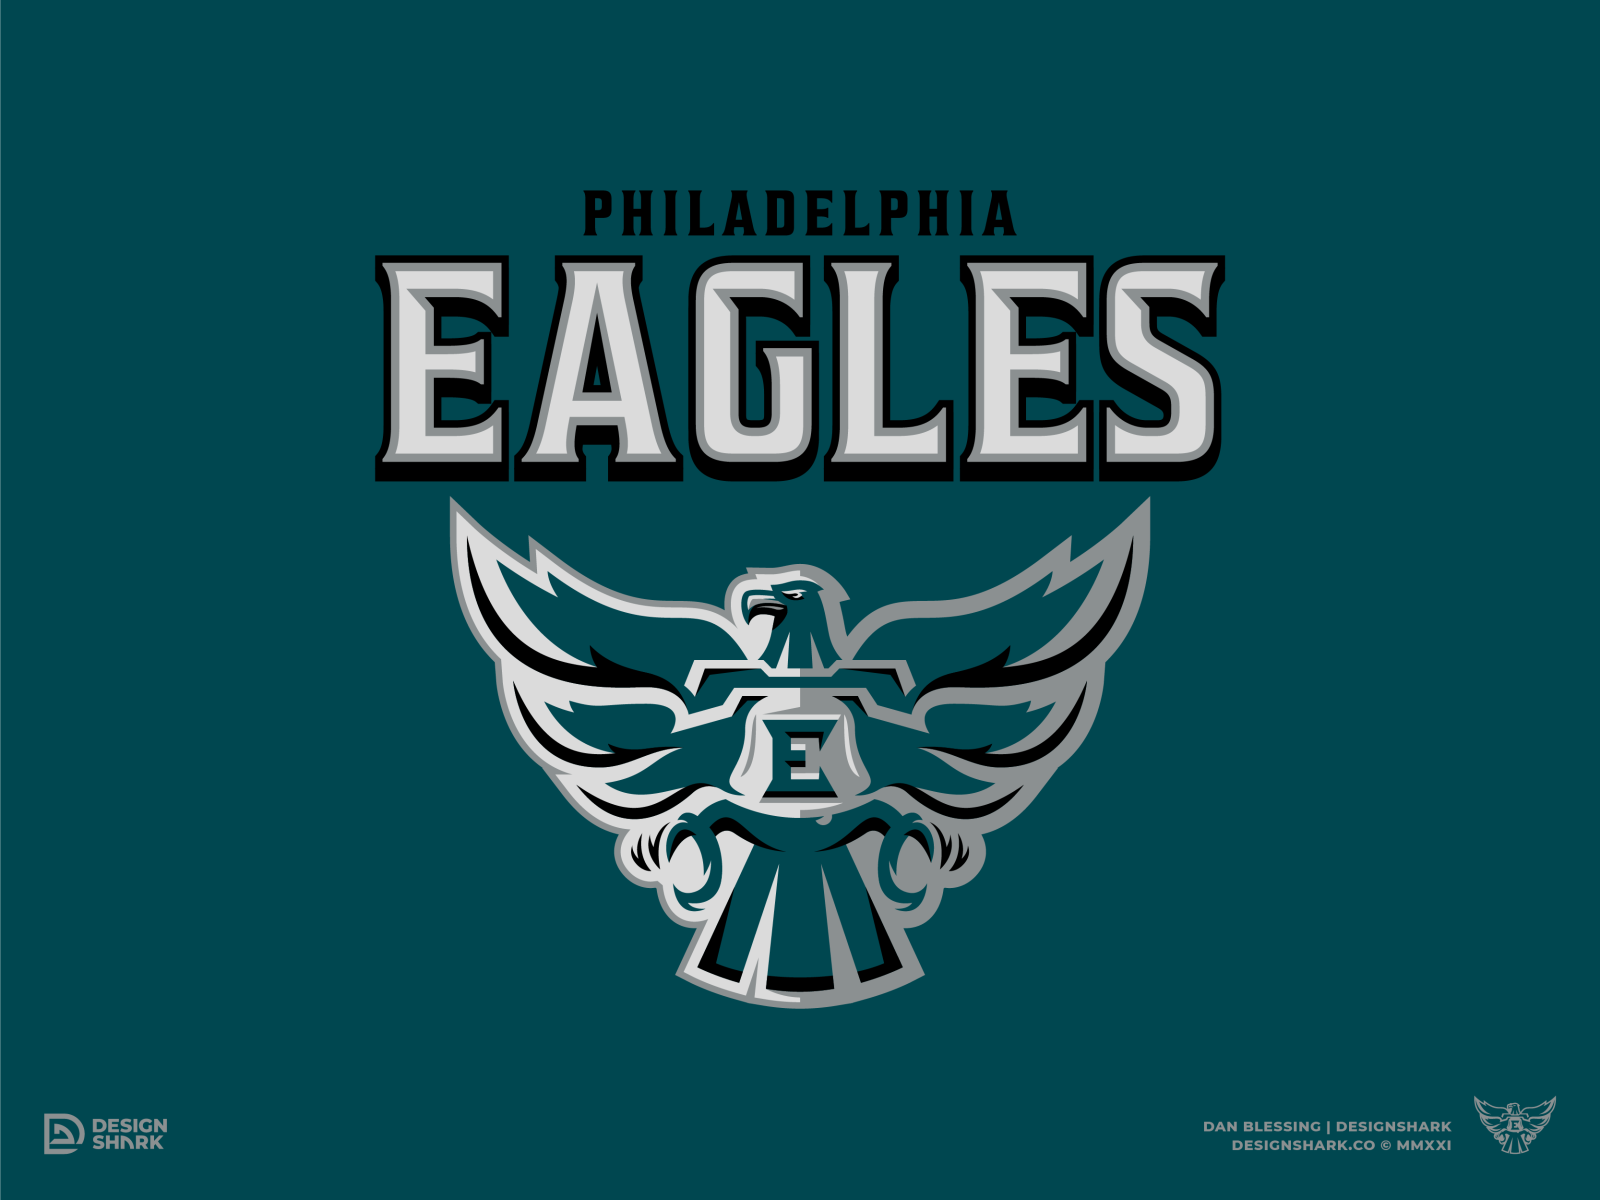 Philadelphia Eagles Branding Identity Proposal on Behance